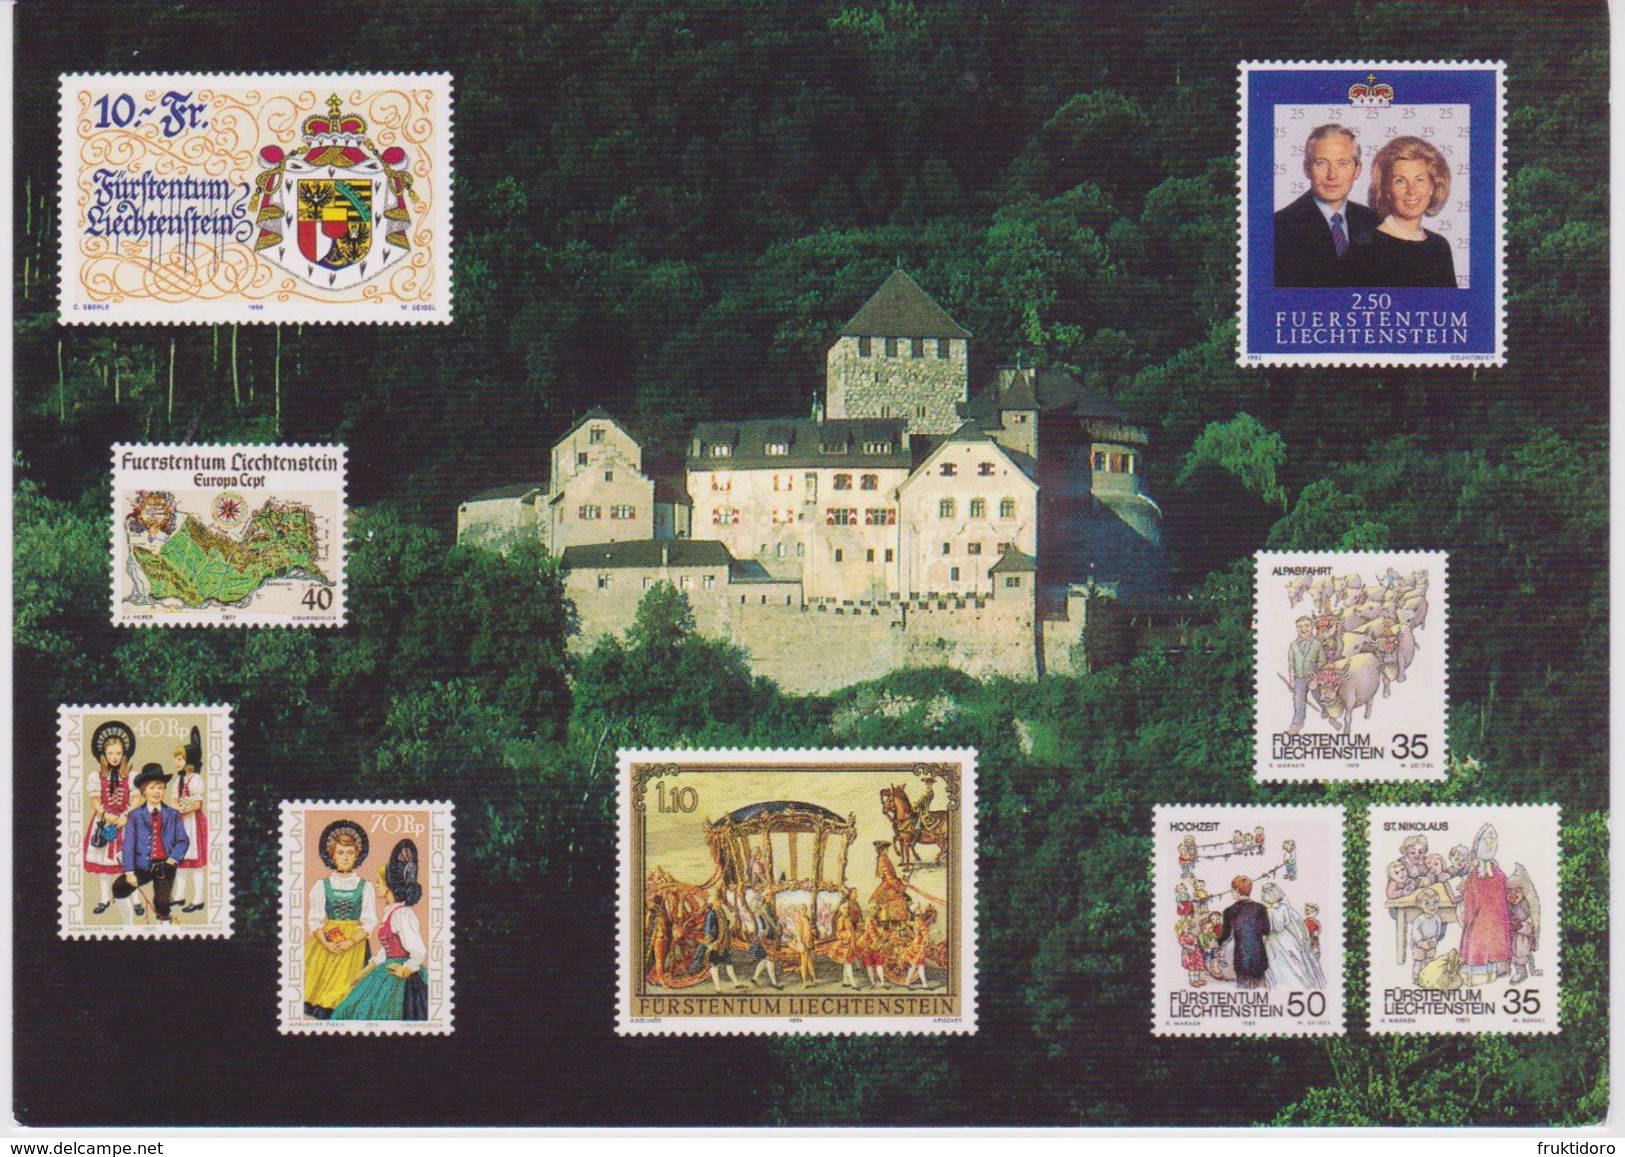 AKFL Liechtenstein Palace - Vaduz Castle - Stamps - Traditional Dress - Coat Of Arms - Map - Wedding - Prince - Liechtenstein